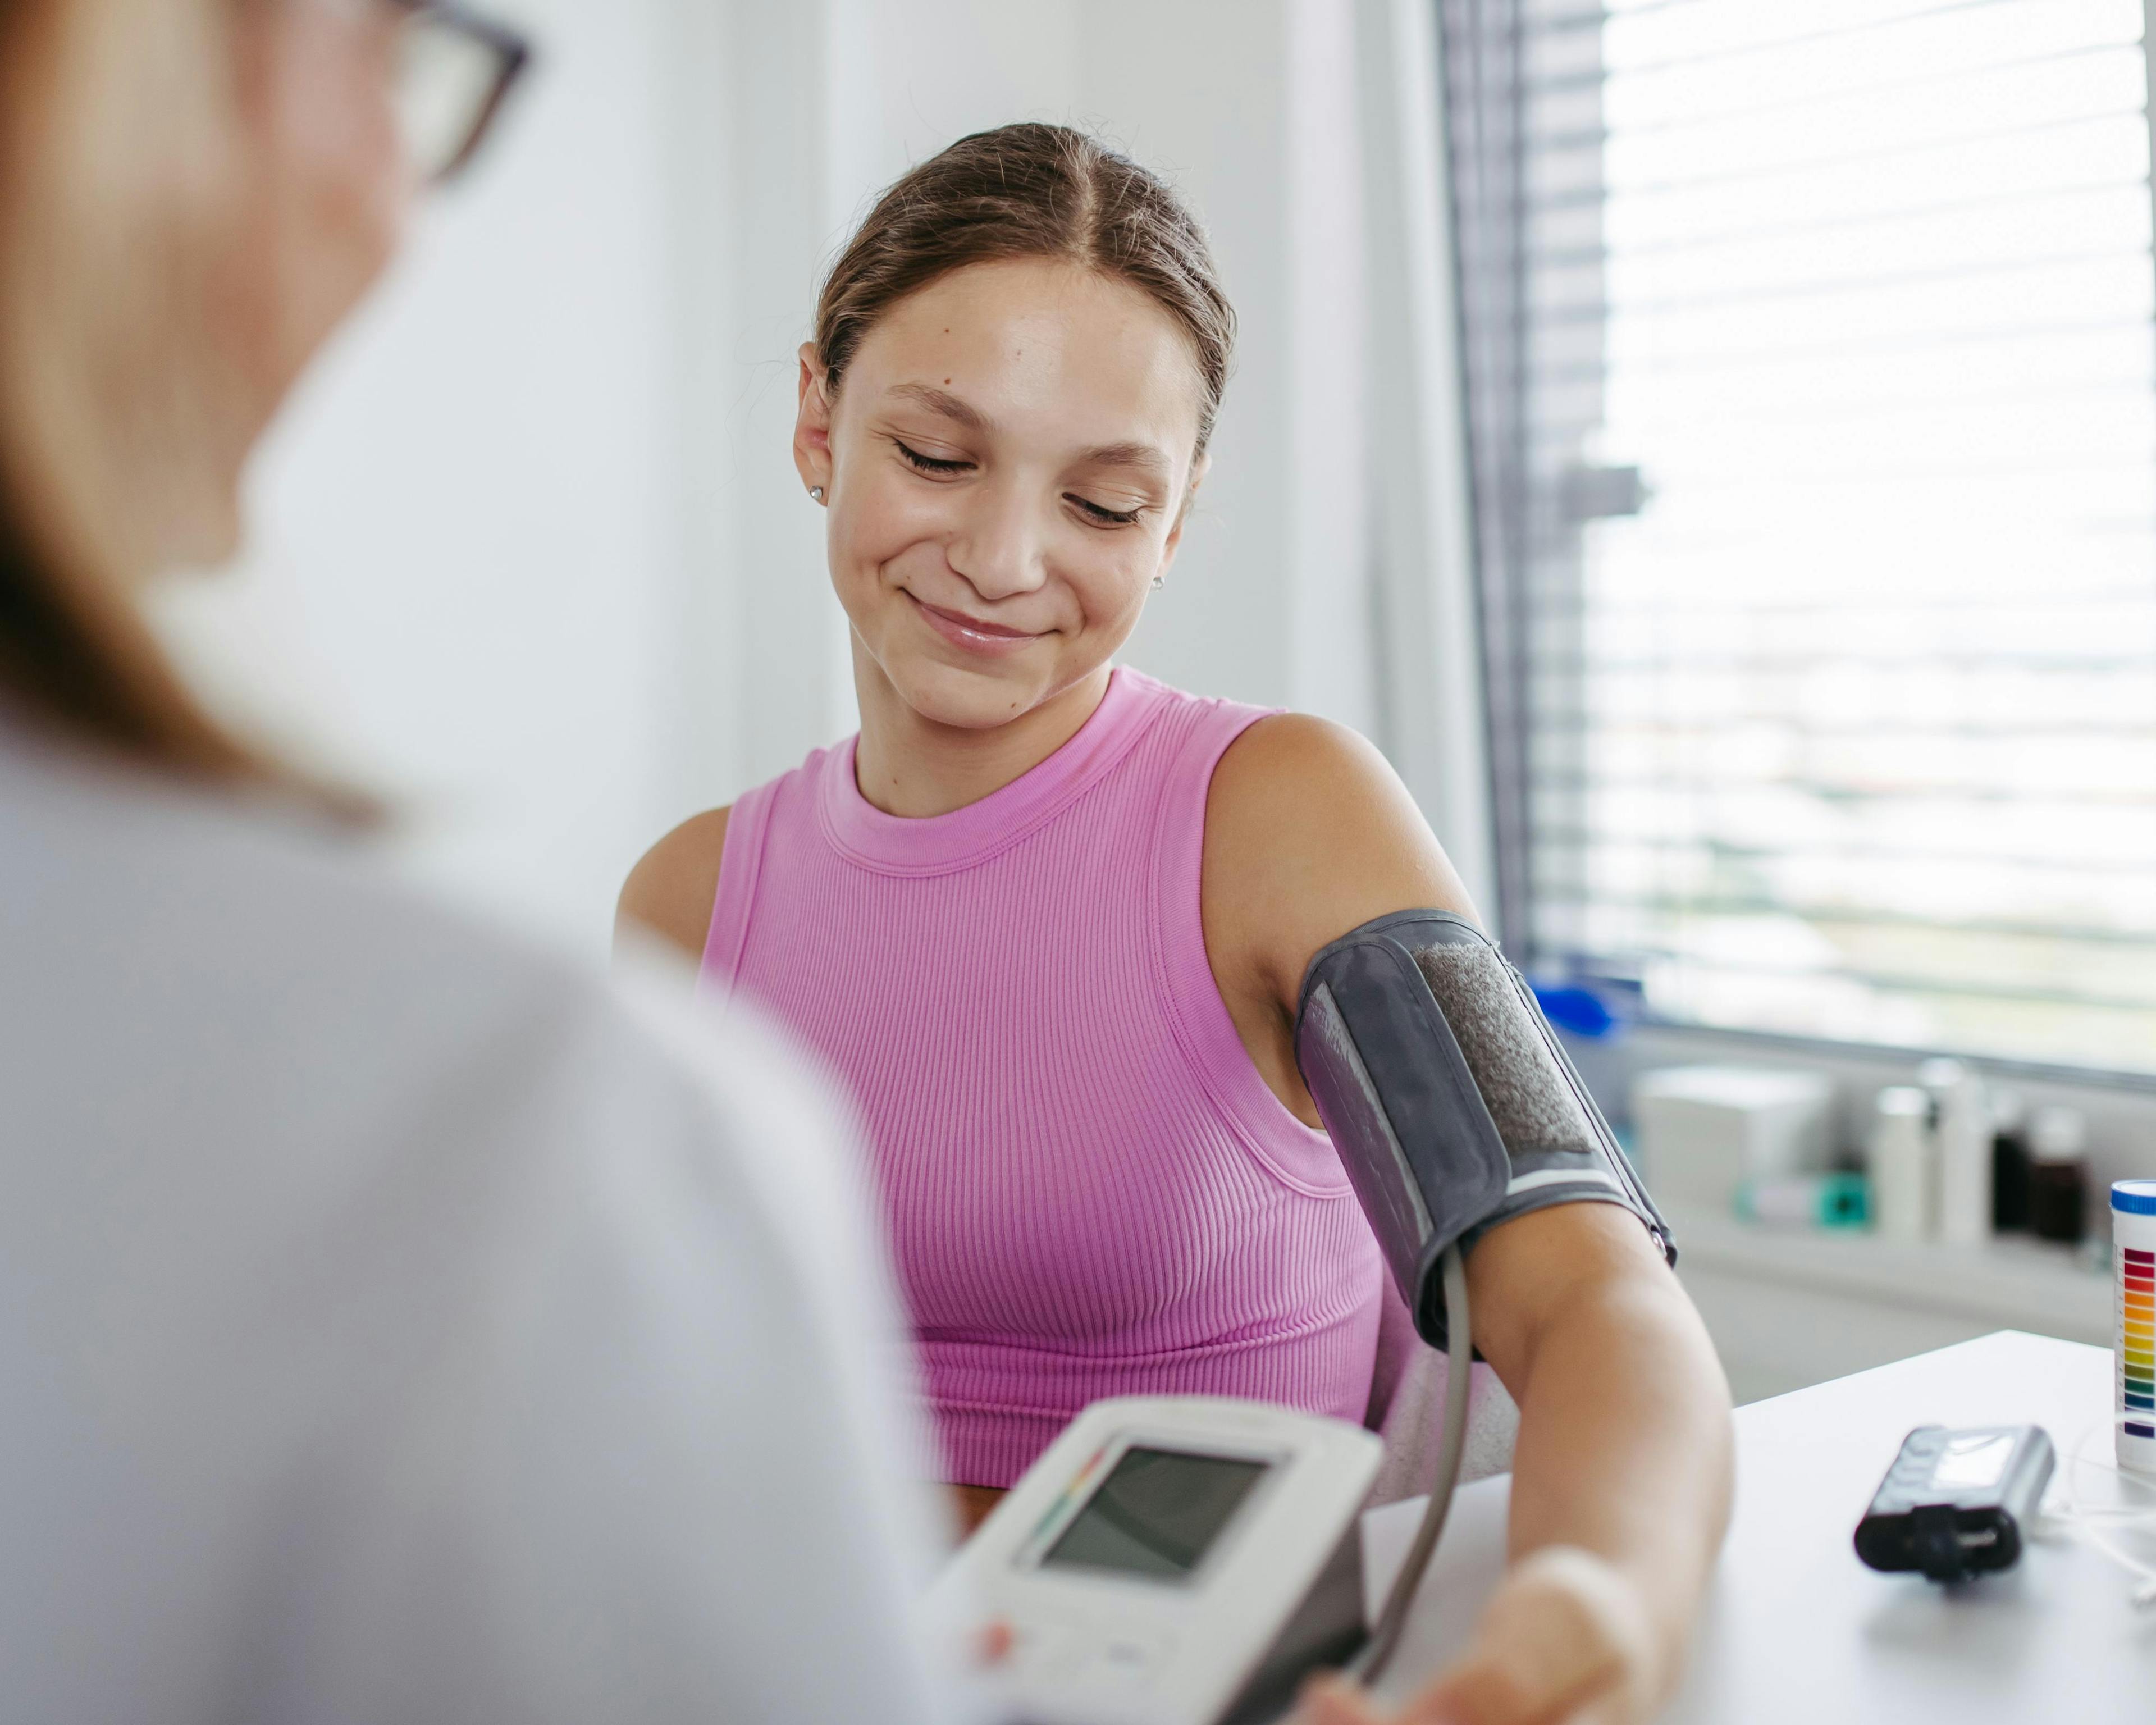 Measuring a patient's blood pressure